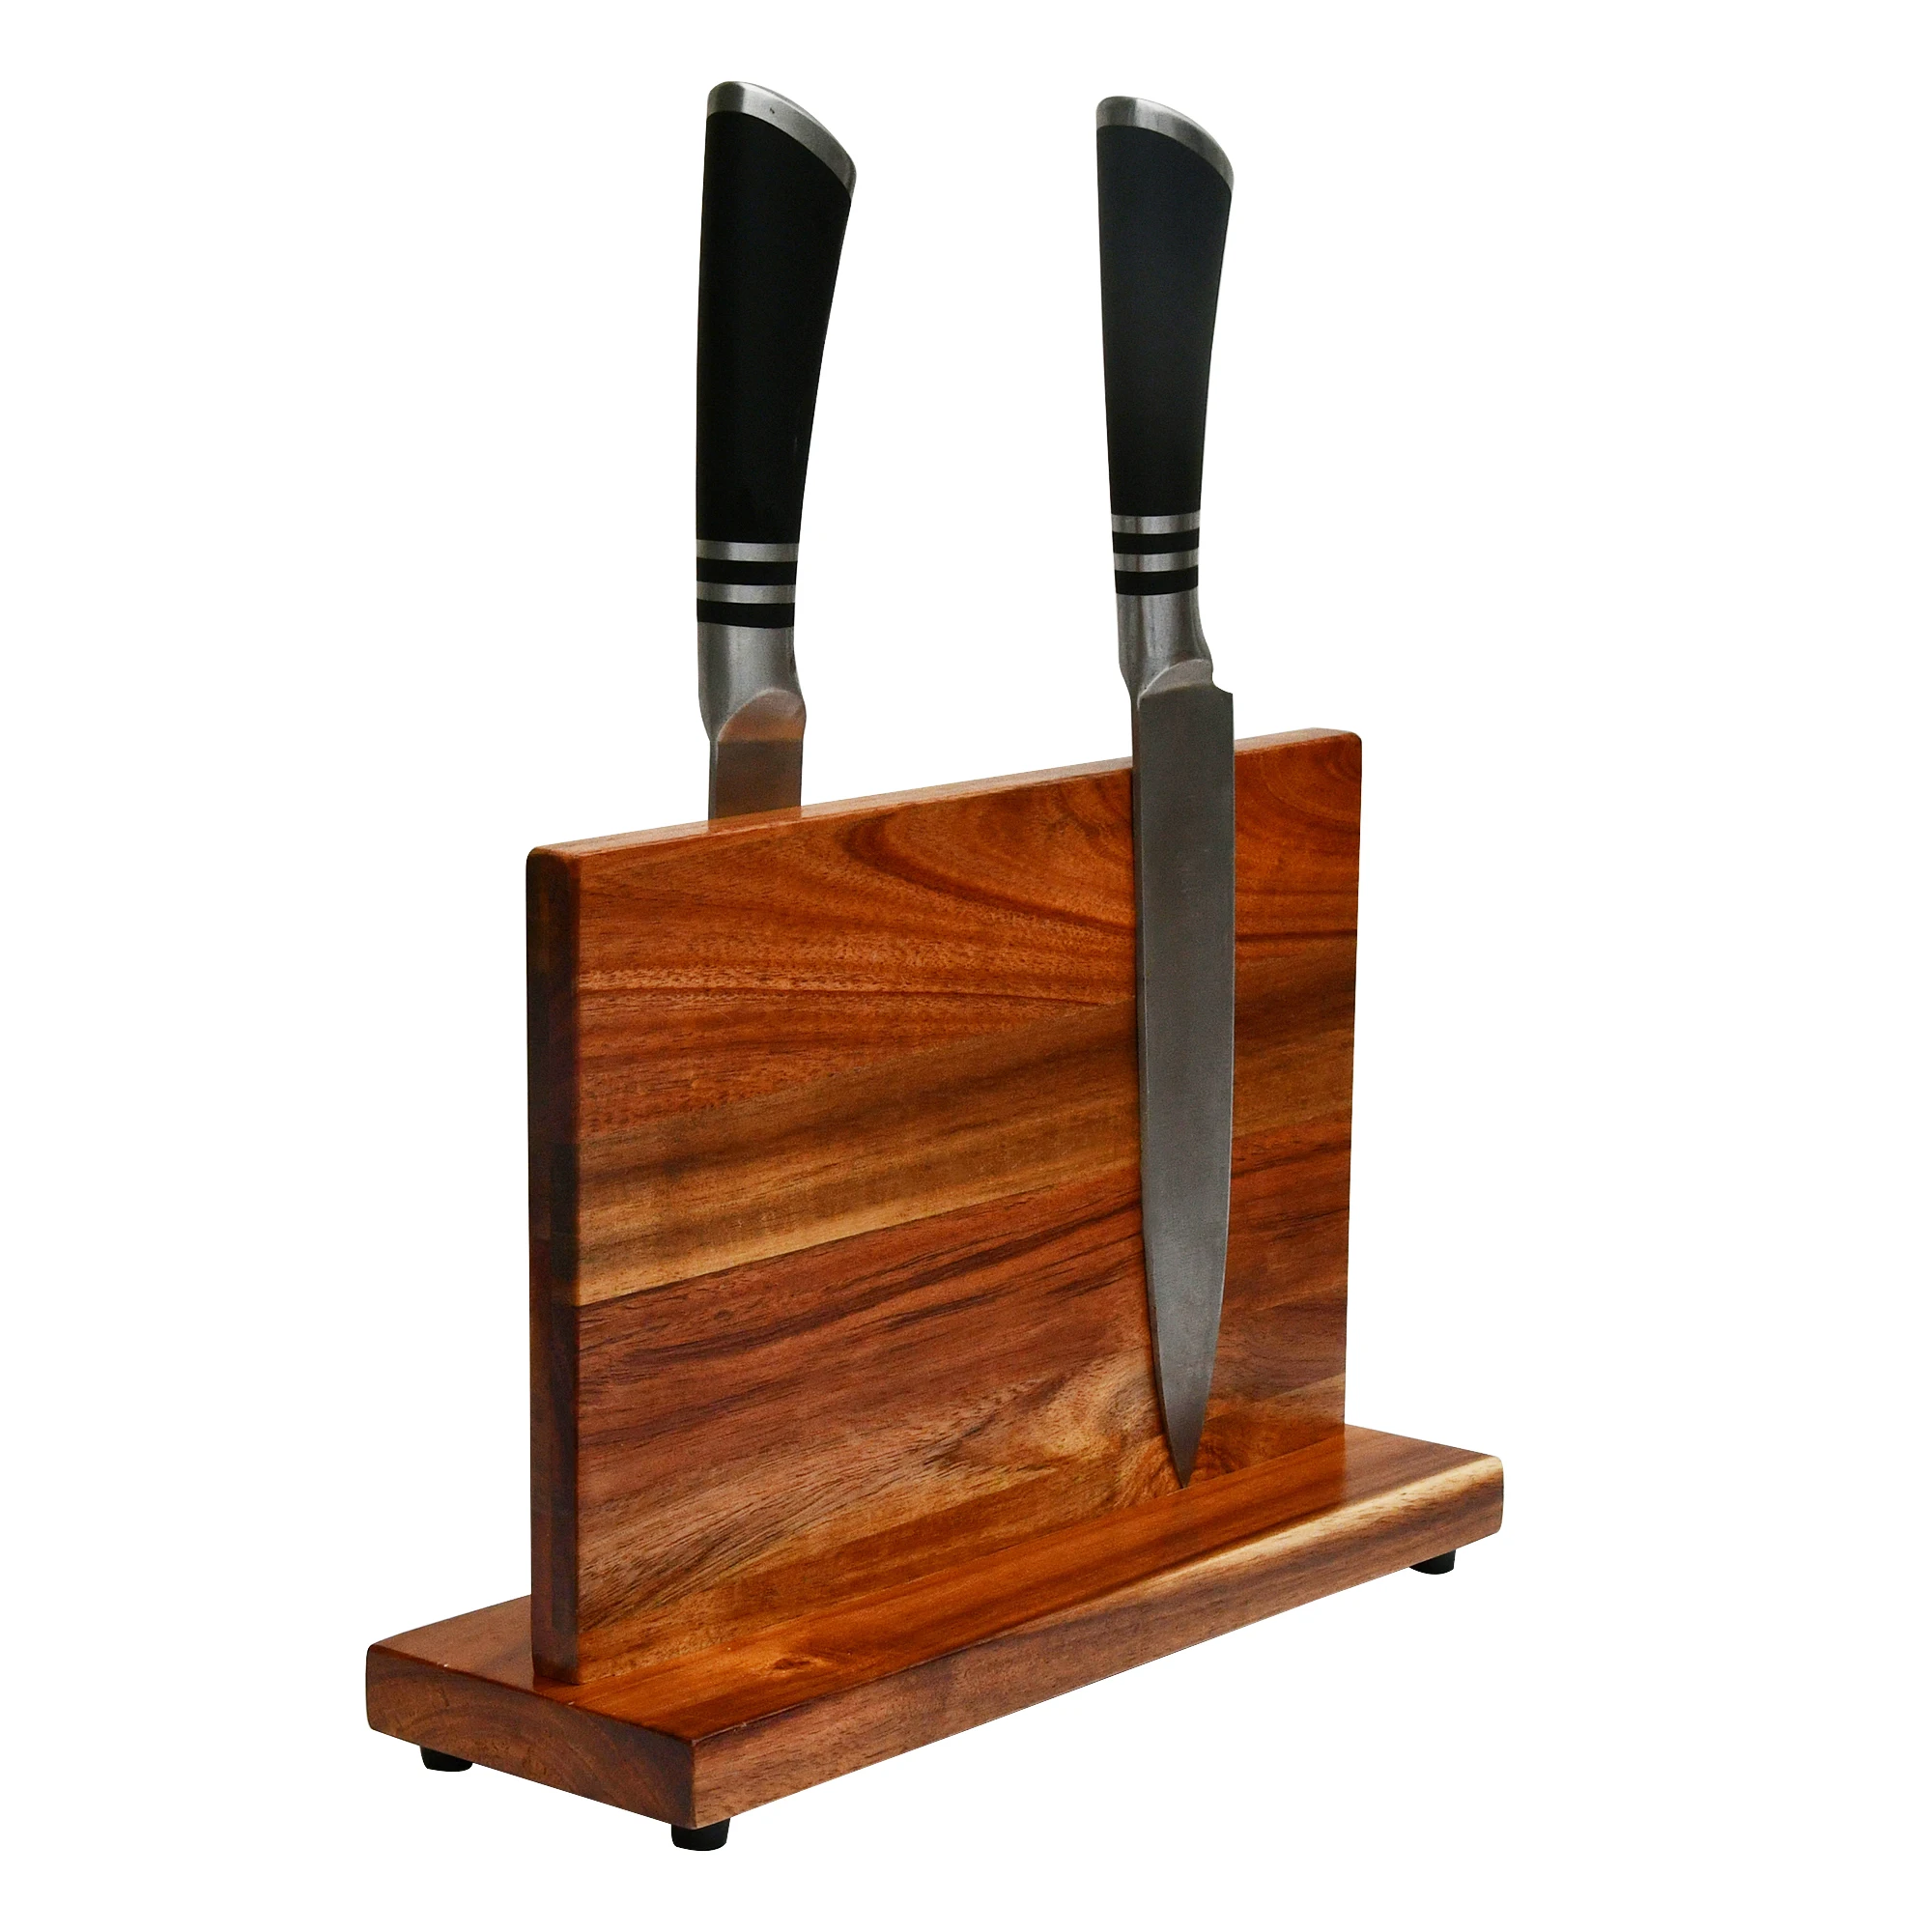 Forged Kitchen Knife Set With Magnet Wooden Block,Magnet Wall Magnetic Knife Holder Wood Block For Kitchen Knife Storage